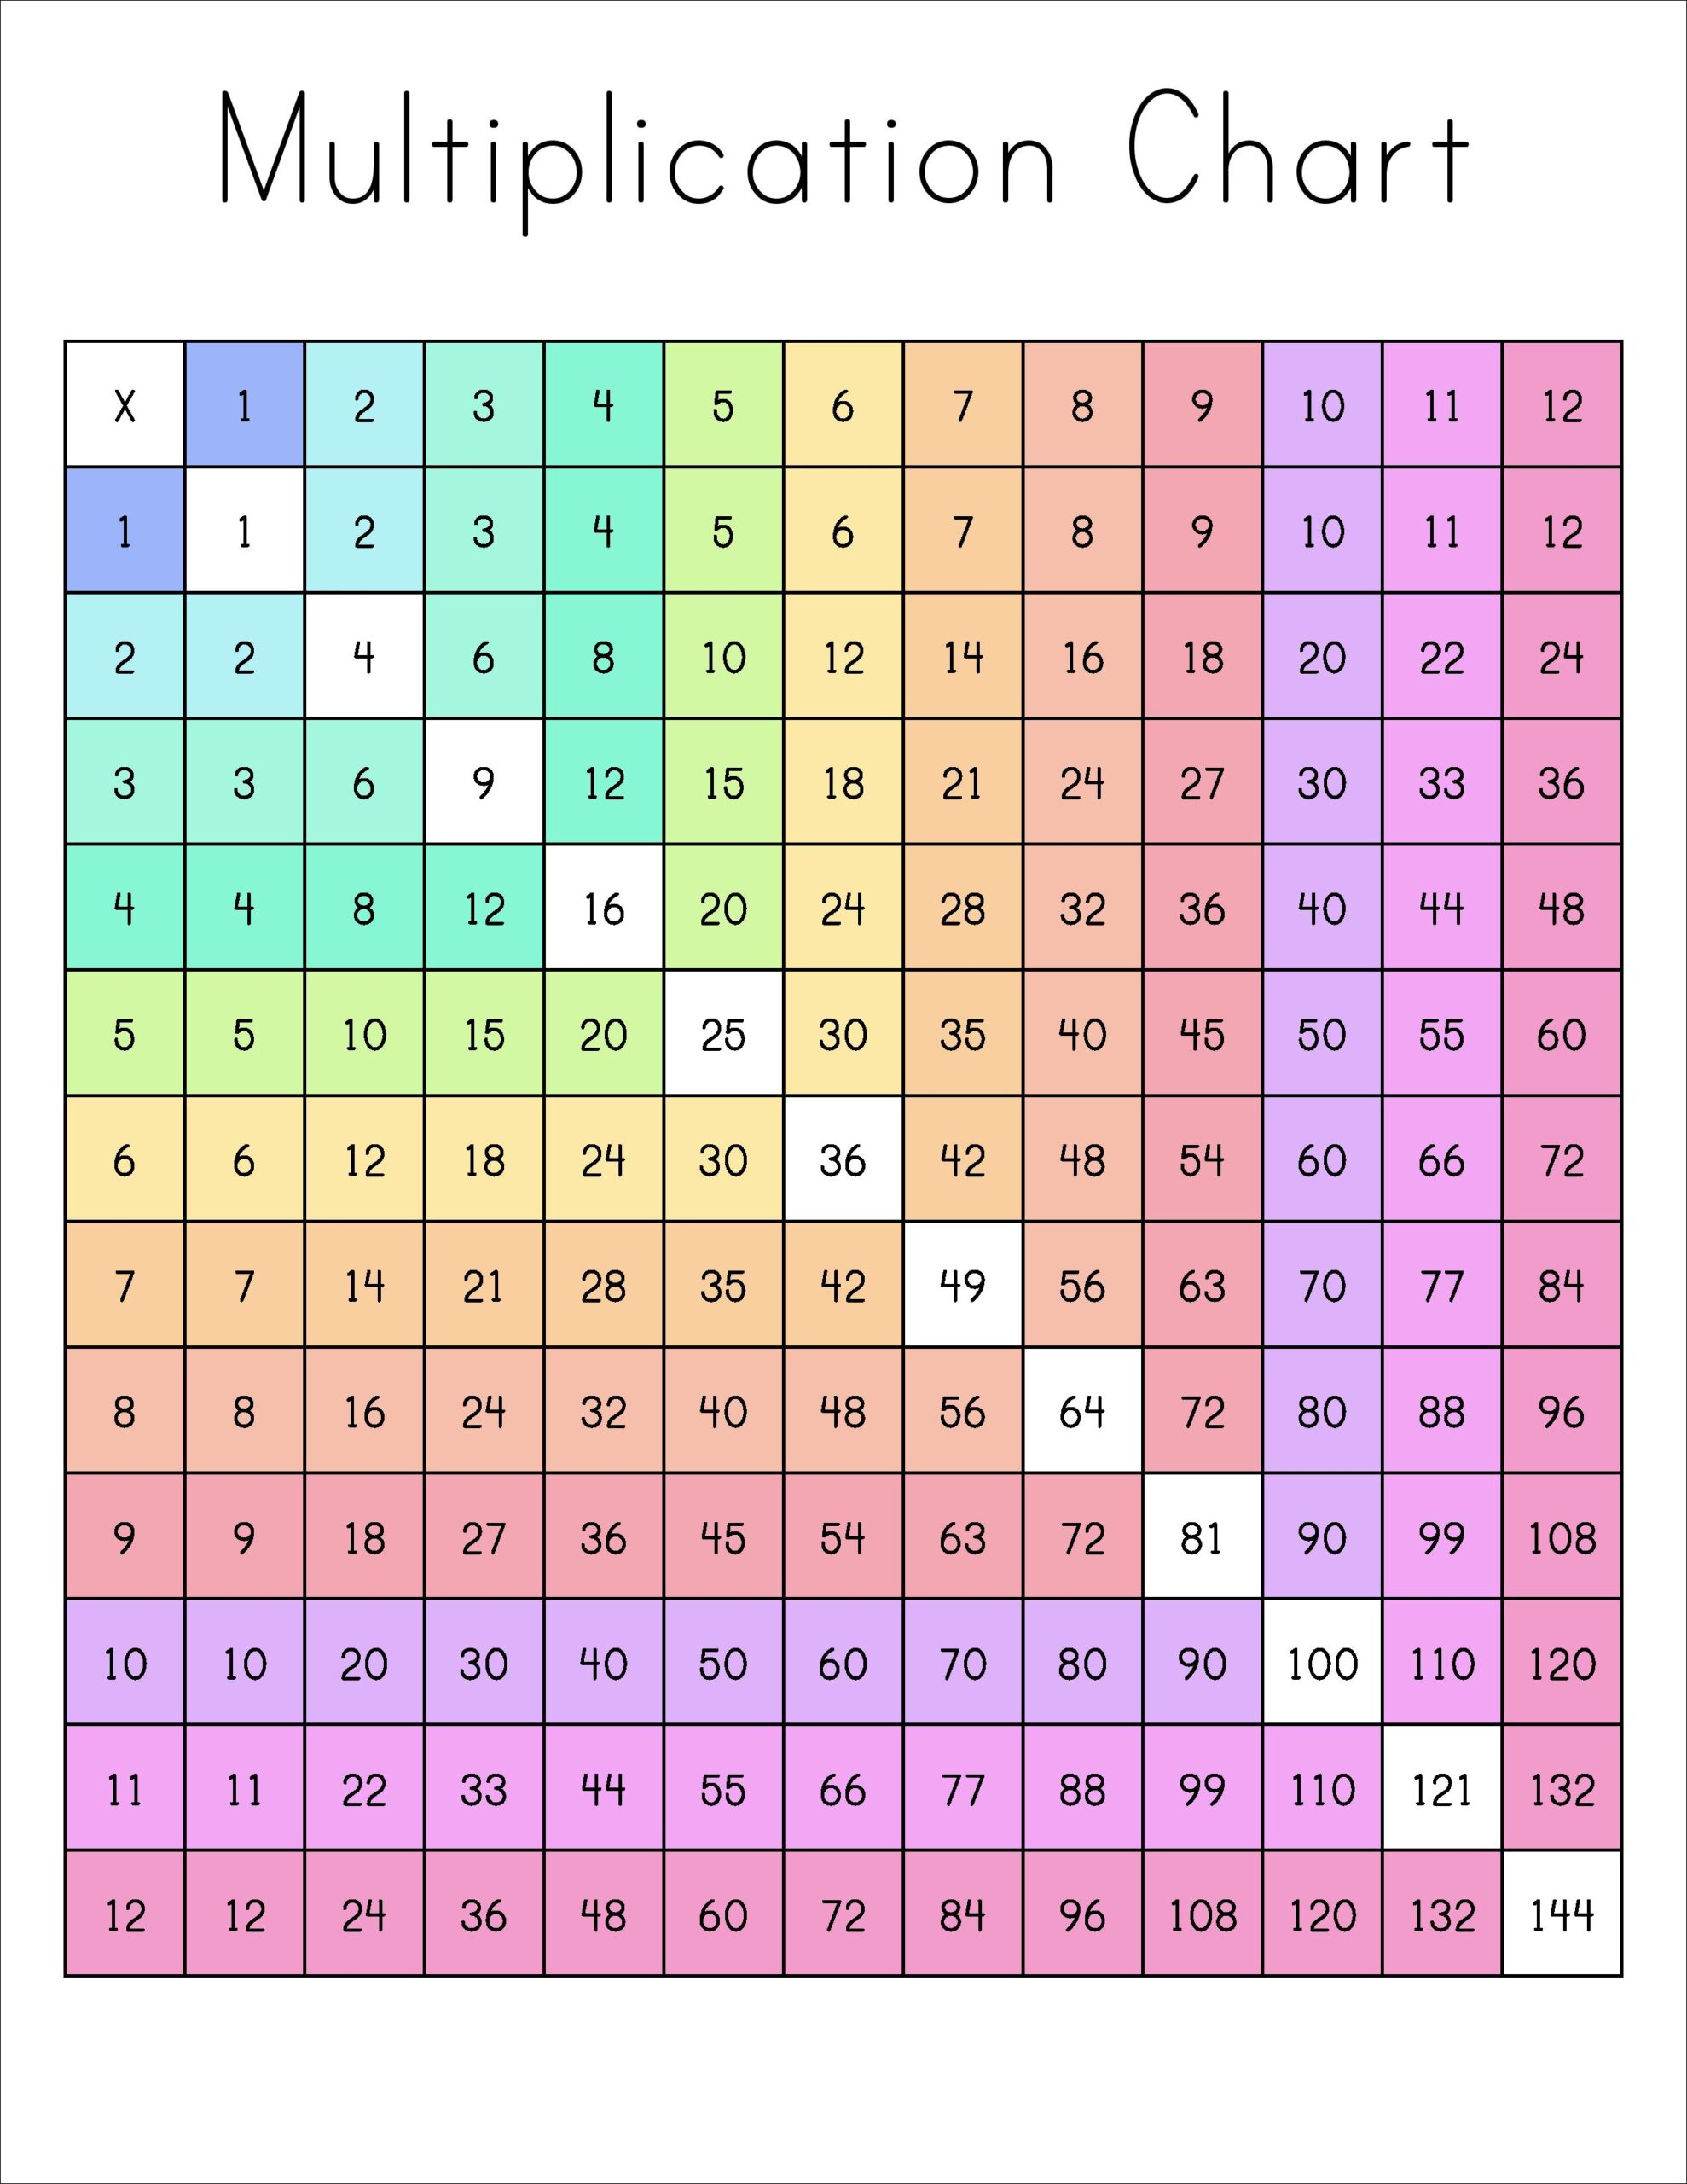 free-multiplication-table-printable-elcho-table